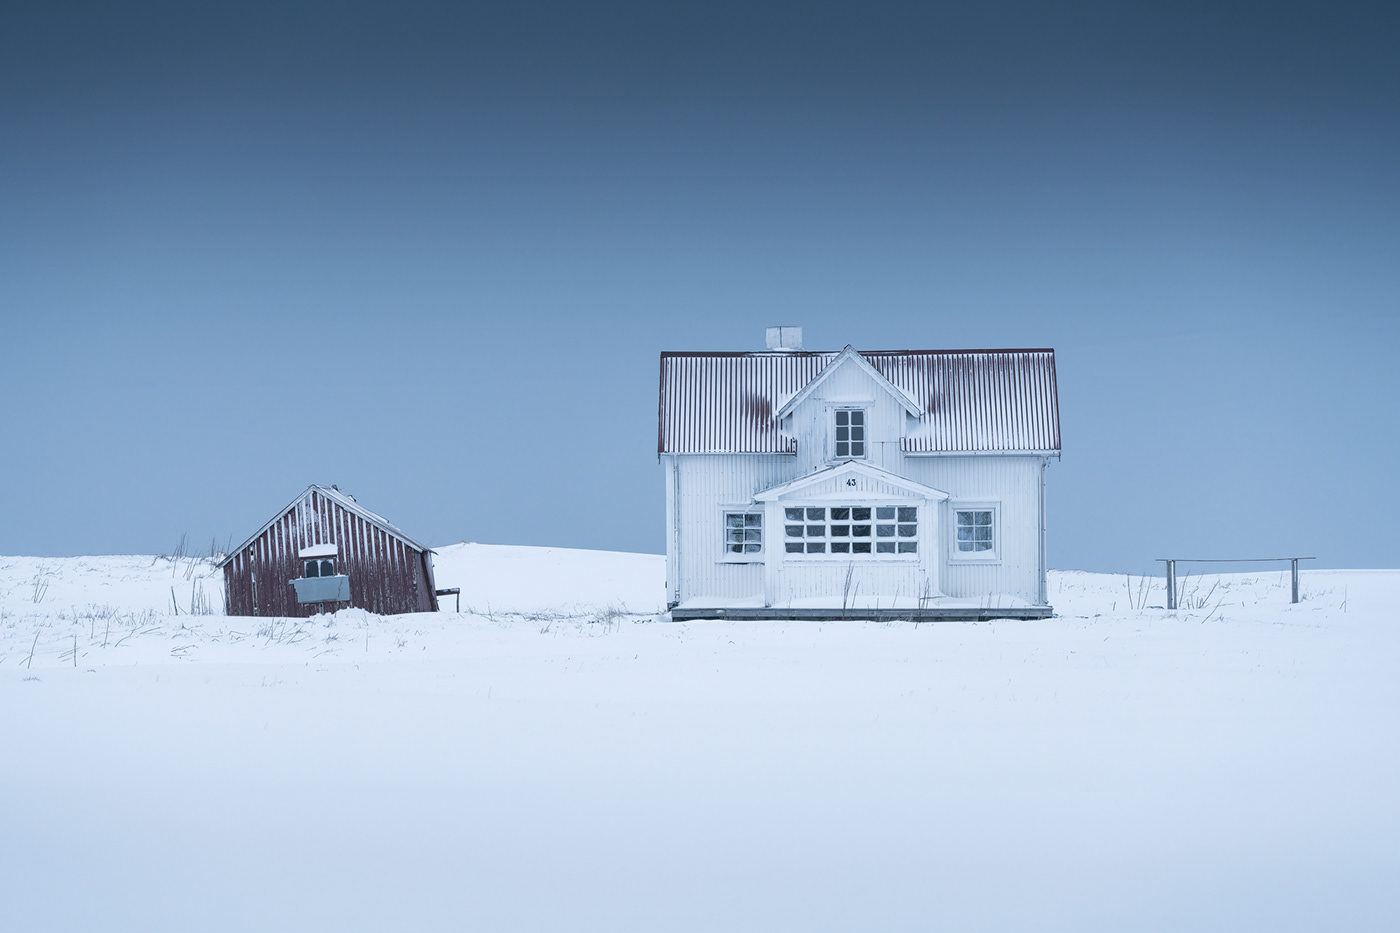 lofoten minimalist norway snow winter Arctic Circle cabin house snowstorm